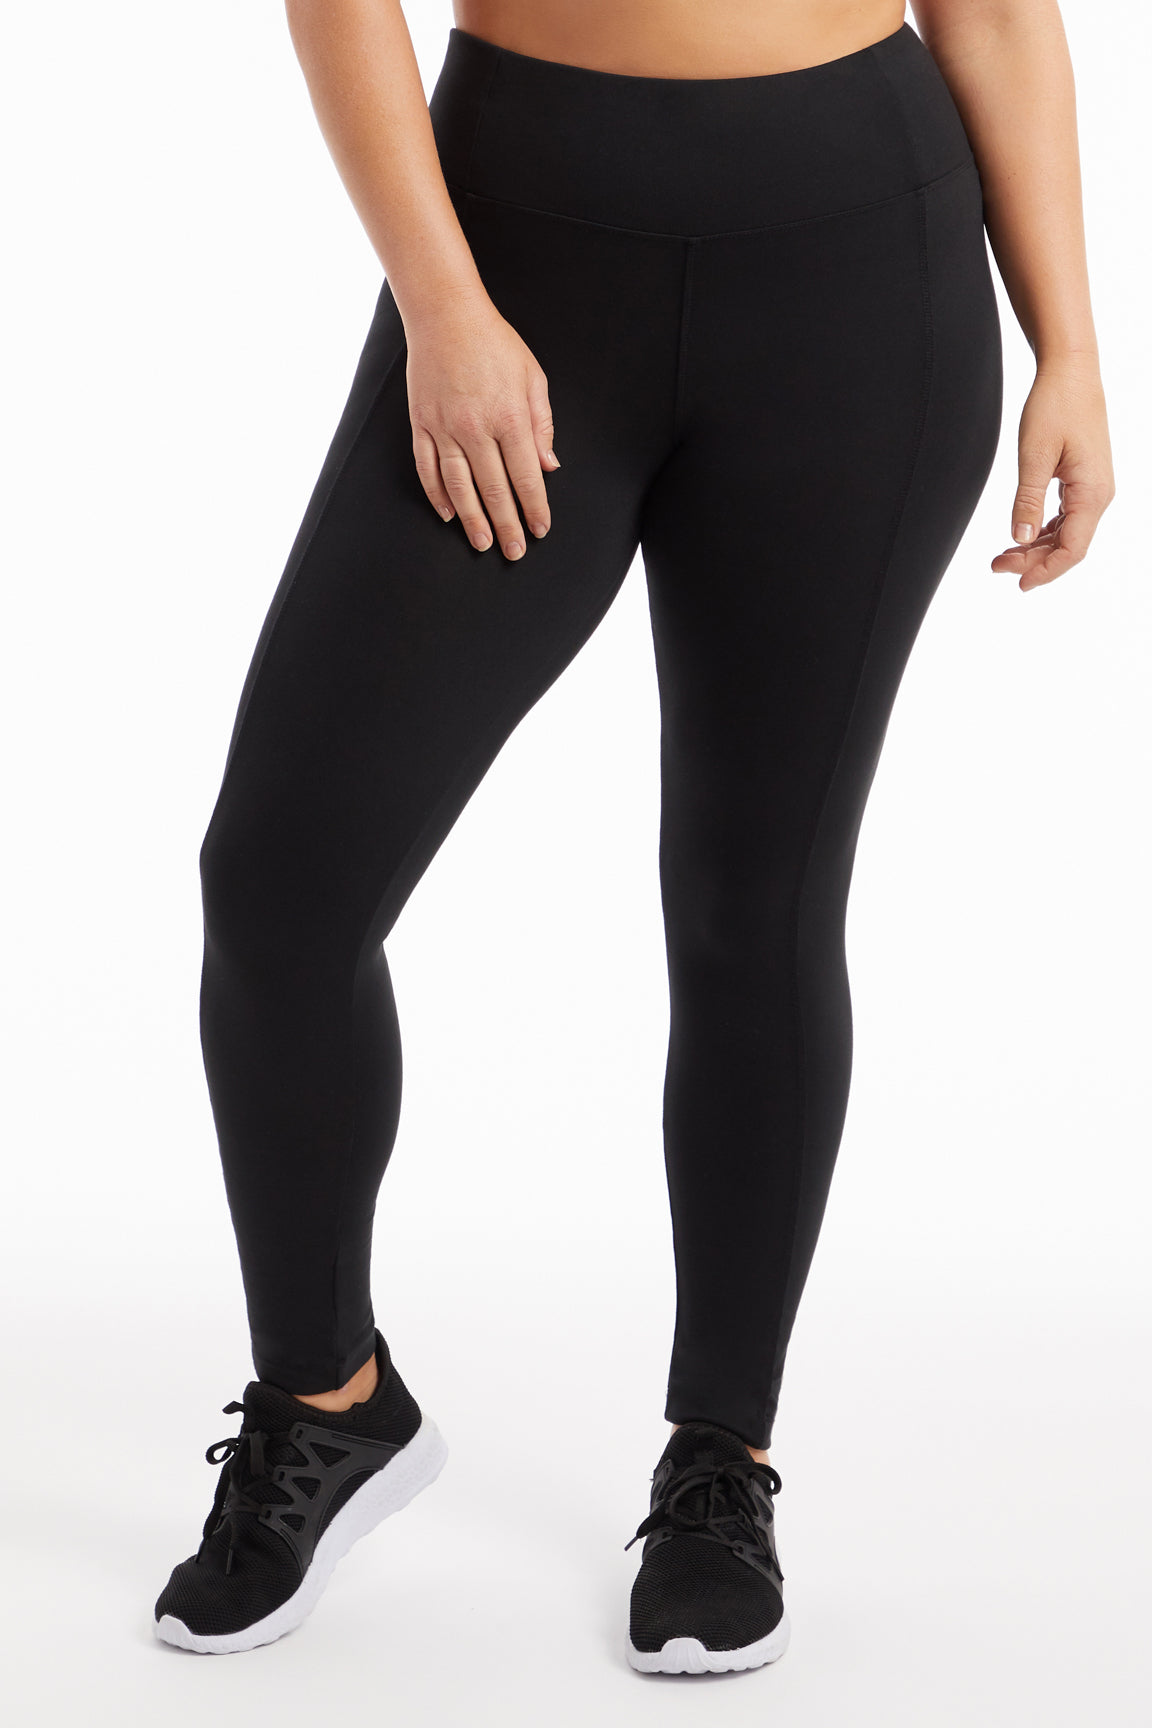 Marika Tummy Control Black Leggings Size Medium w/Pockets NEW - $22 New  With Tags - From Danielle